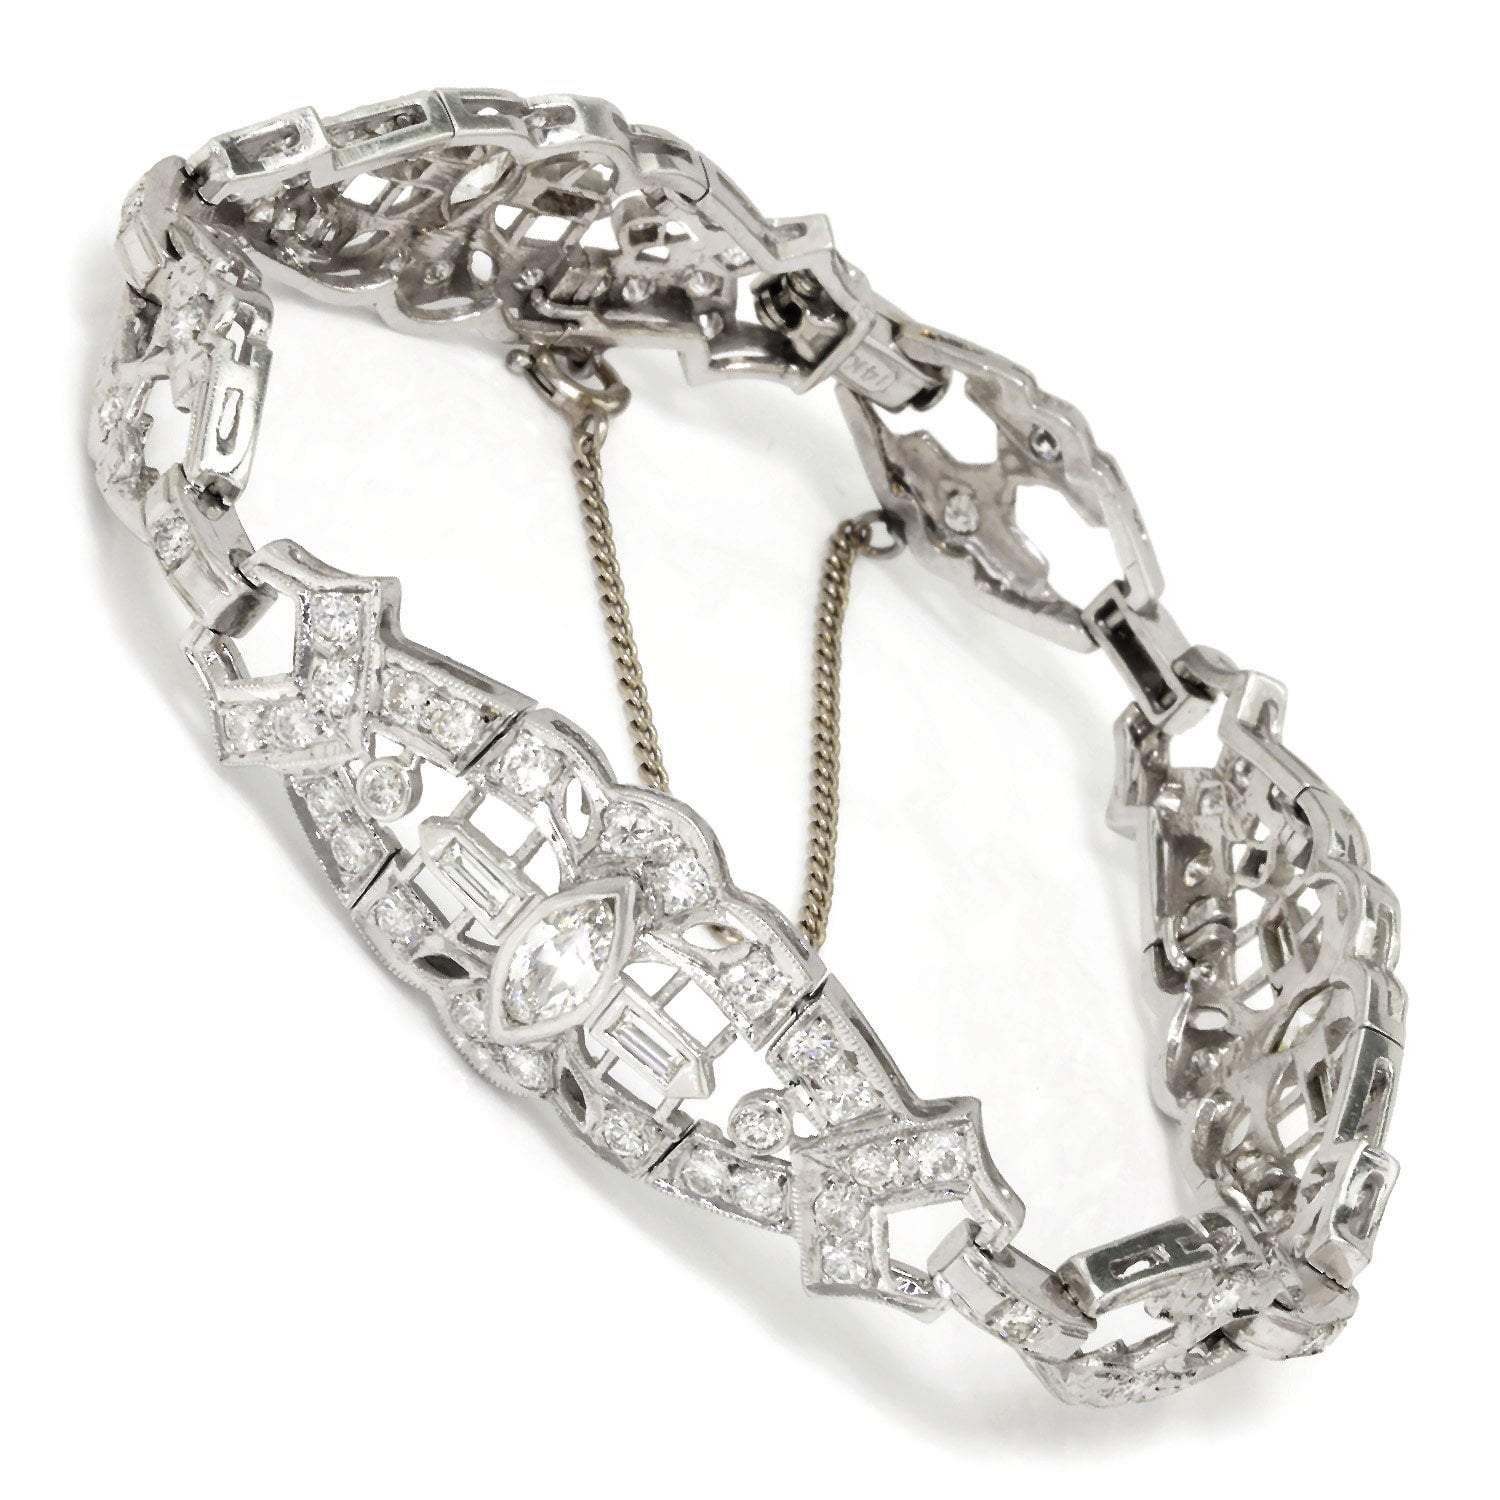 Antique Rose-Cut Diamond Bracelet - French Import